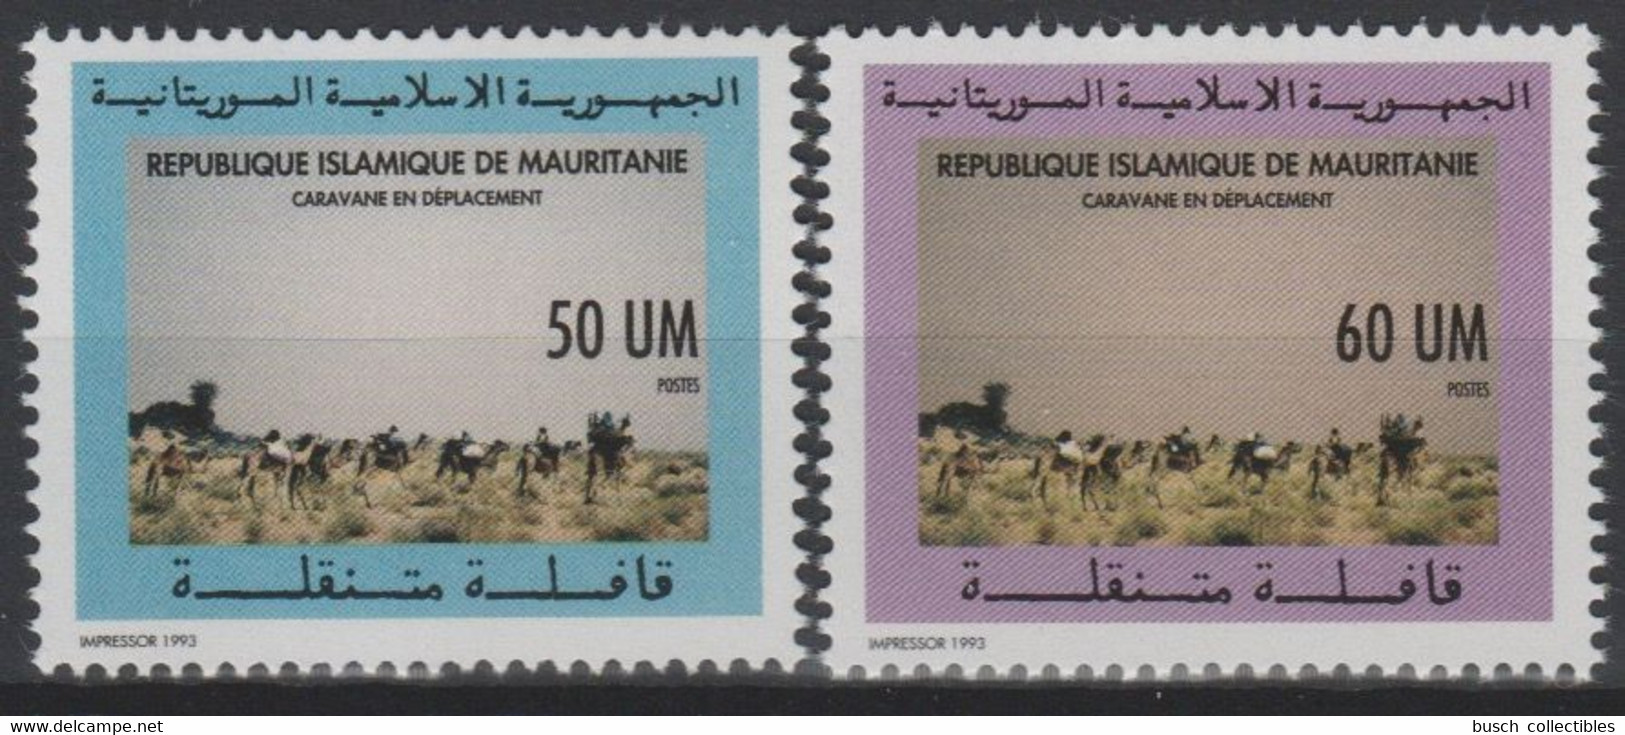 Mauritanie Mauretanien Mauritania 1993 Mi. 1008 - 1009 Caravane En Déplacement Camel Chameau Kamel Faune Fauna 2 Val. ** - Mauritanie (1960-...)